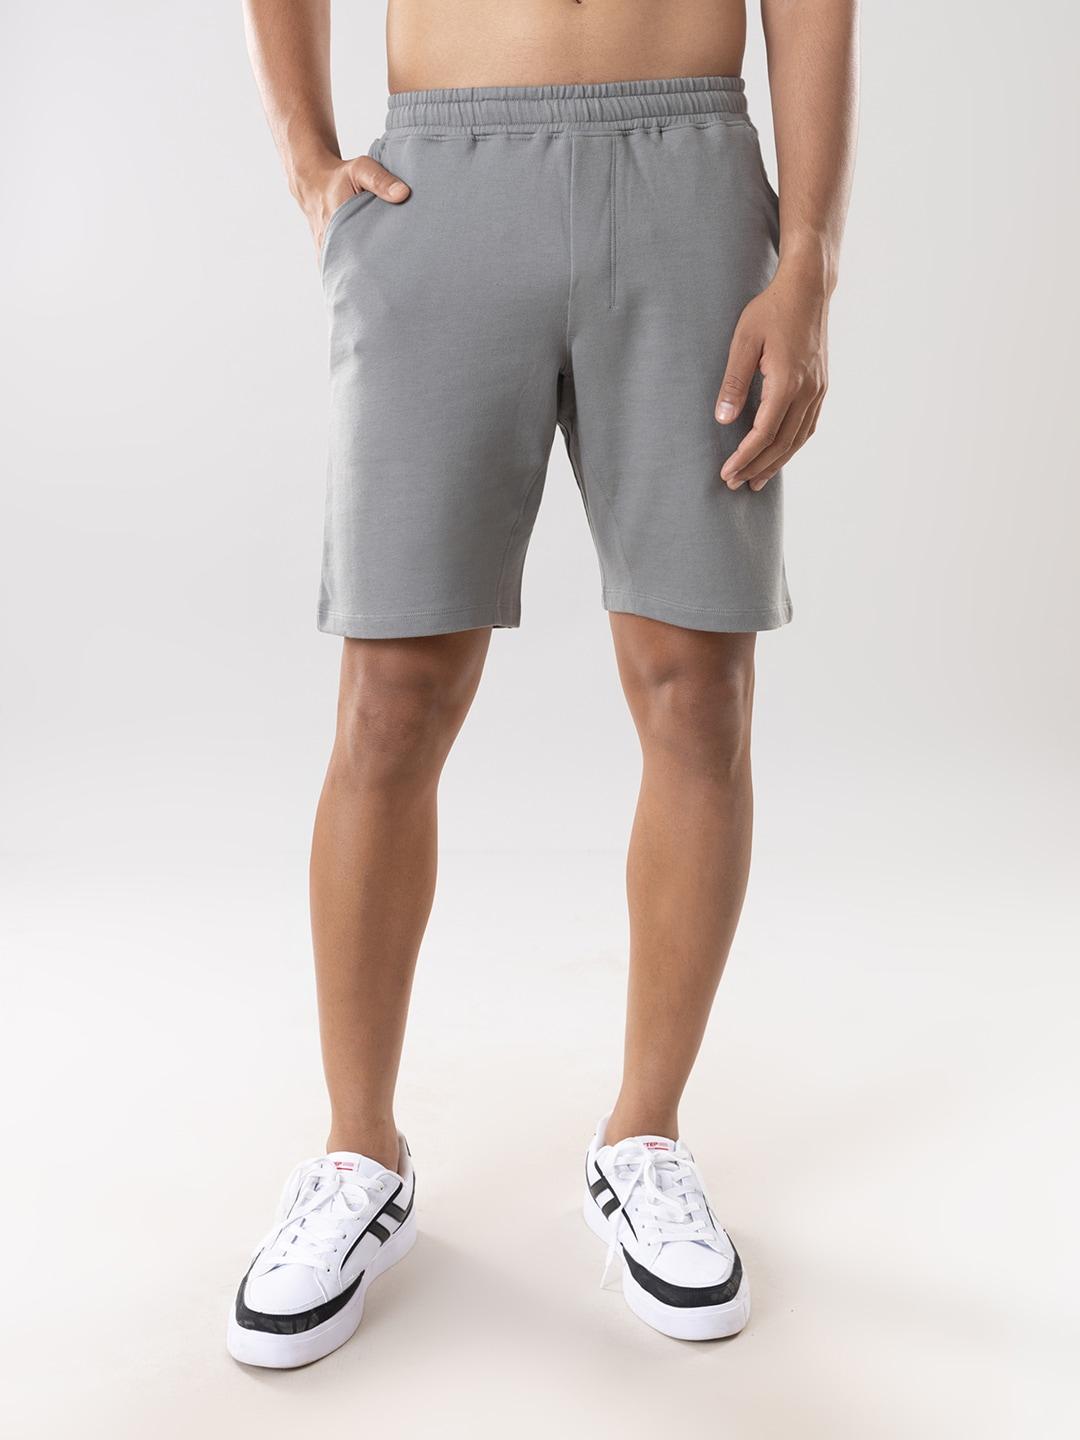 gloot men grey anti odor cotton shorts with smart pocket & anti stain tech